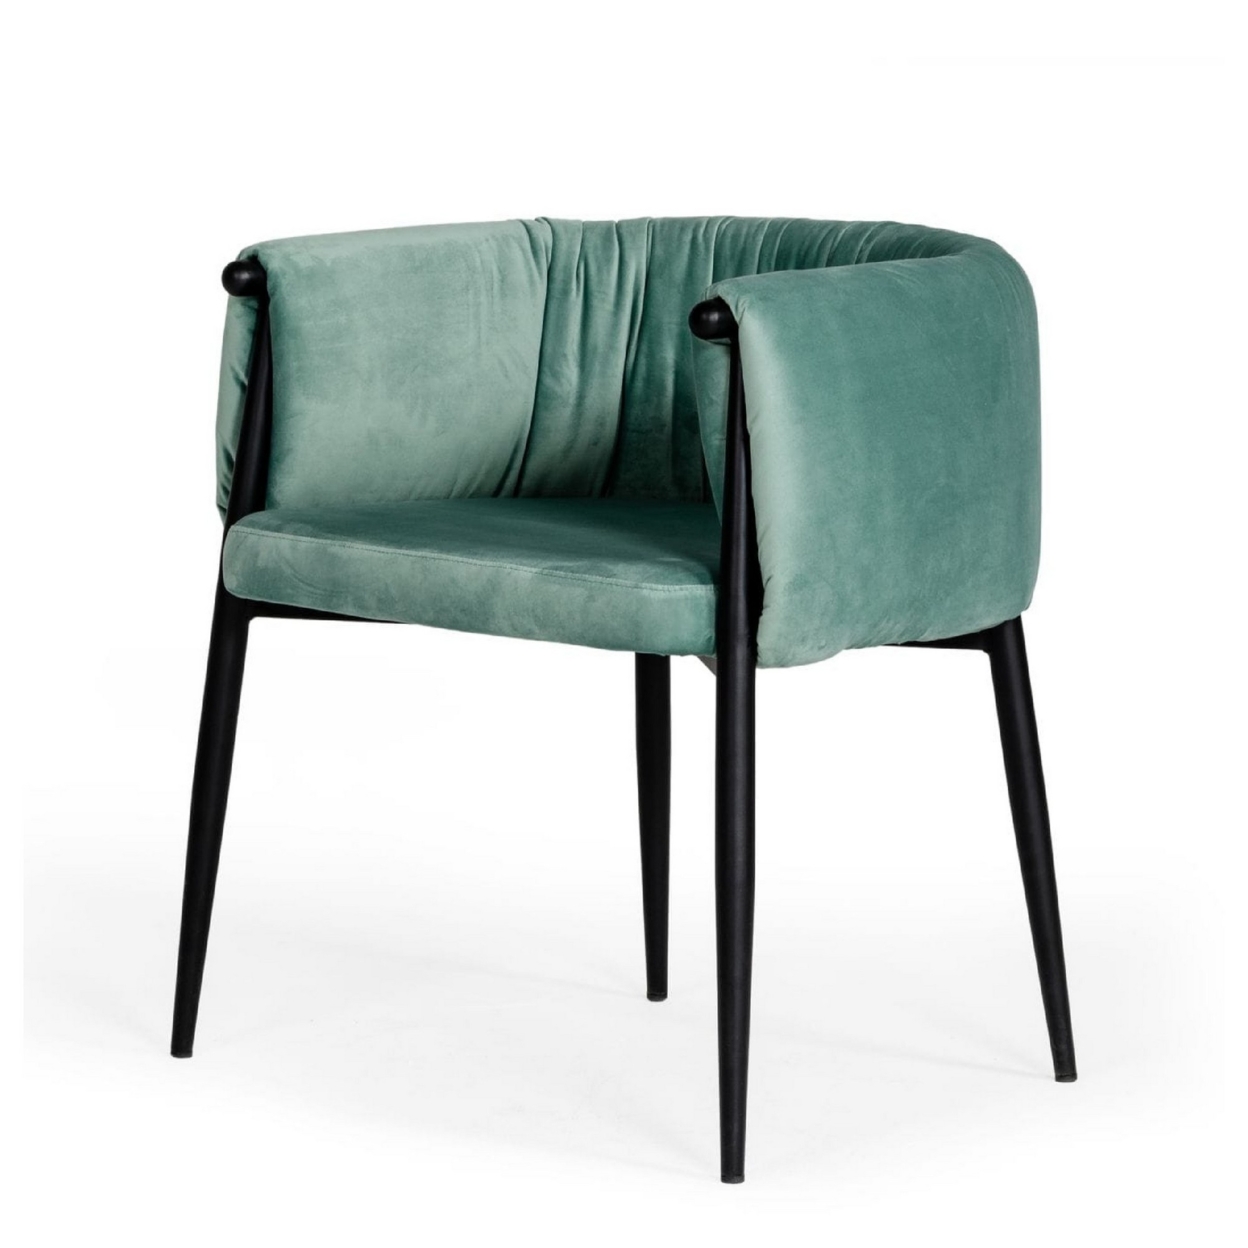 Cid 28 Inch Modern Fabric Dining Chair With Armrest, Cushion Seat, Green- Saltoro Sherpi